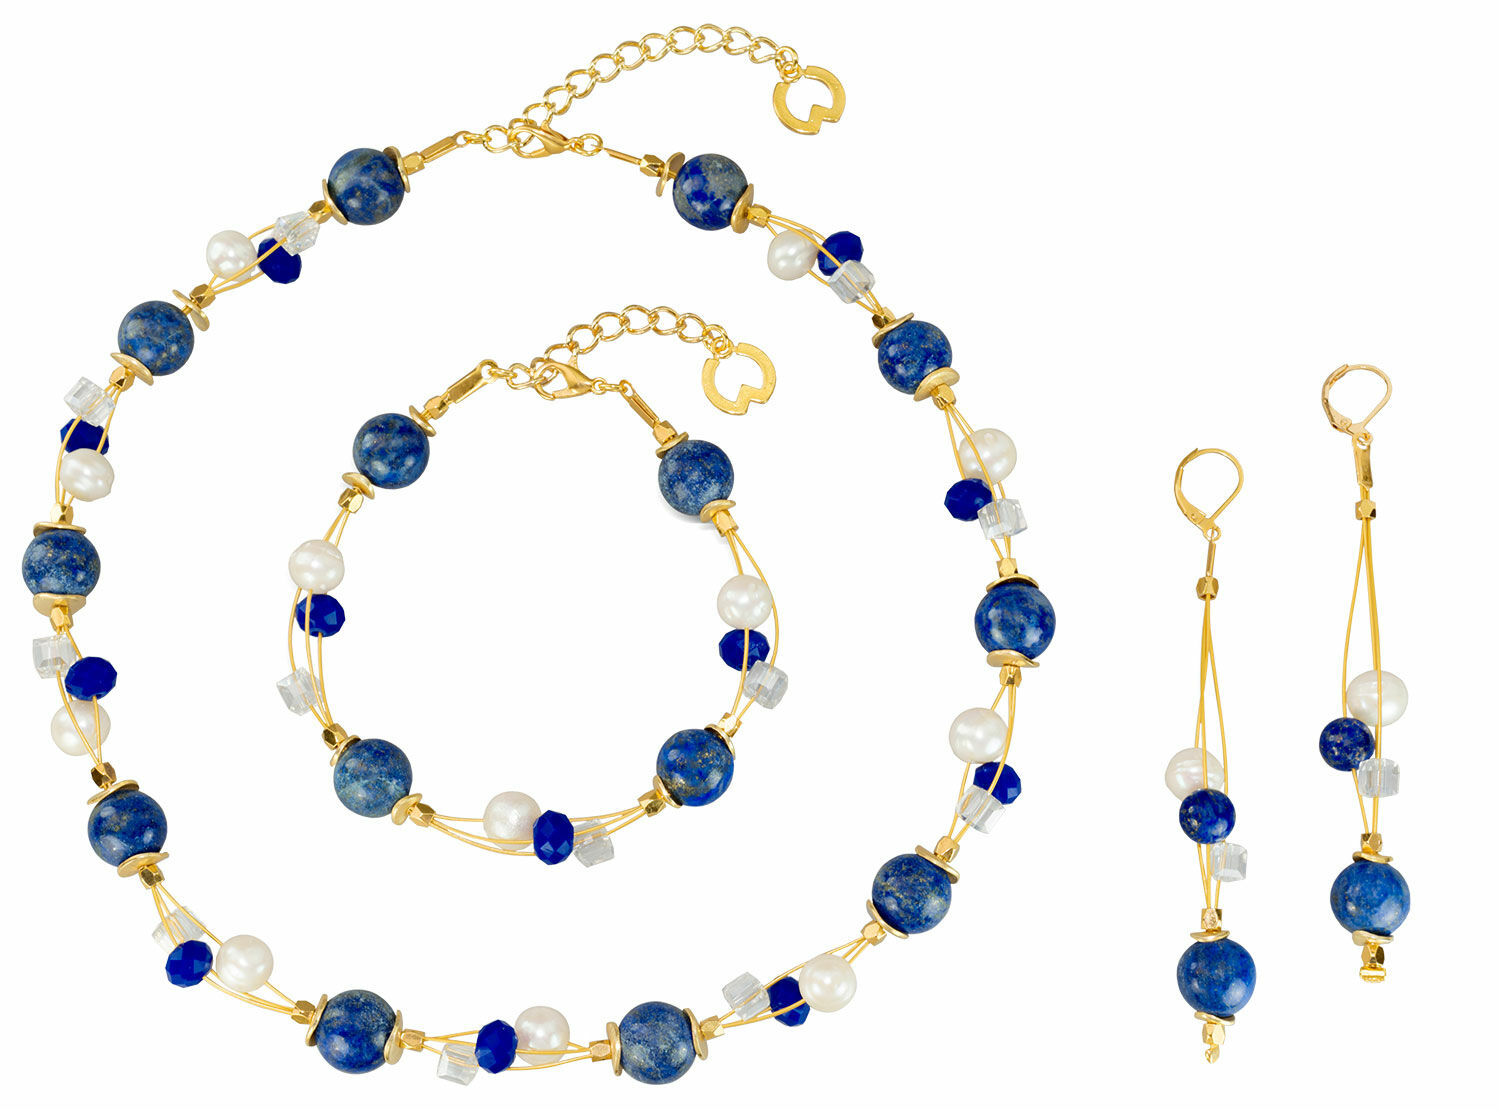 Pearl jewellery set "Starry Sky" by Petra Waszak